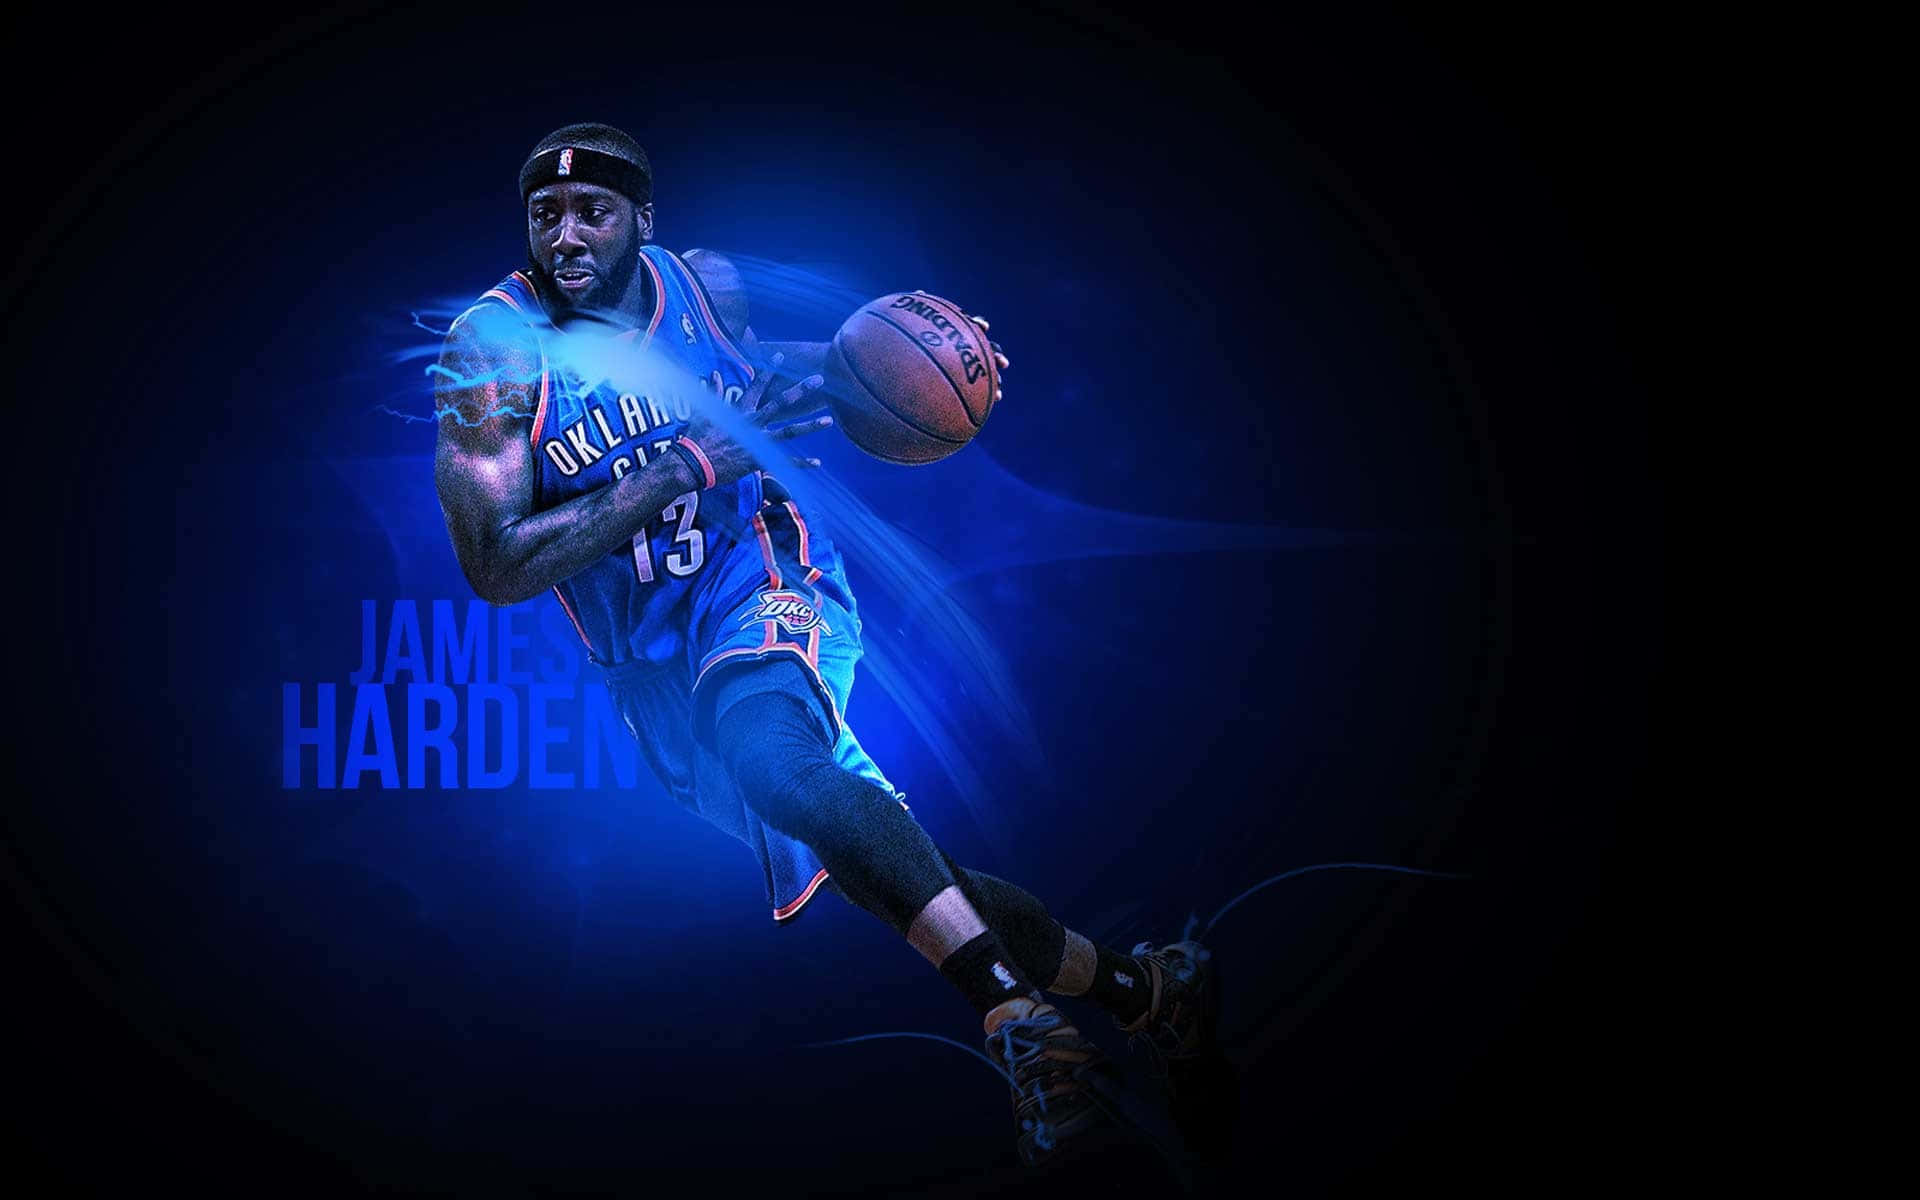 iriserende design - NBA League Oklahoma City Thunder James Harden iriserende design Wallpaper